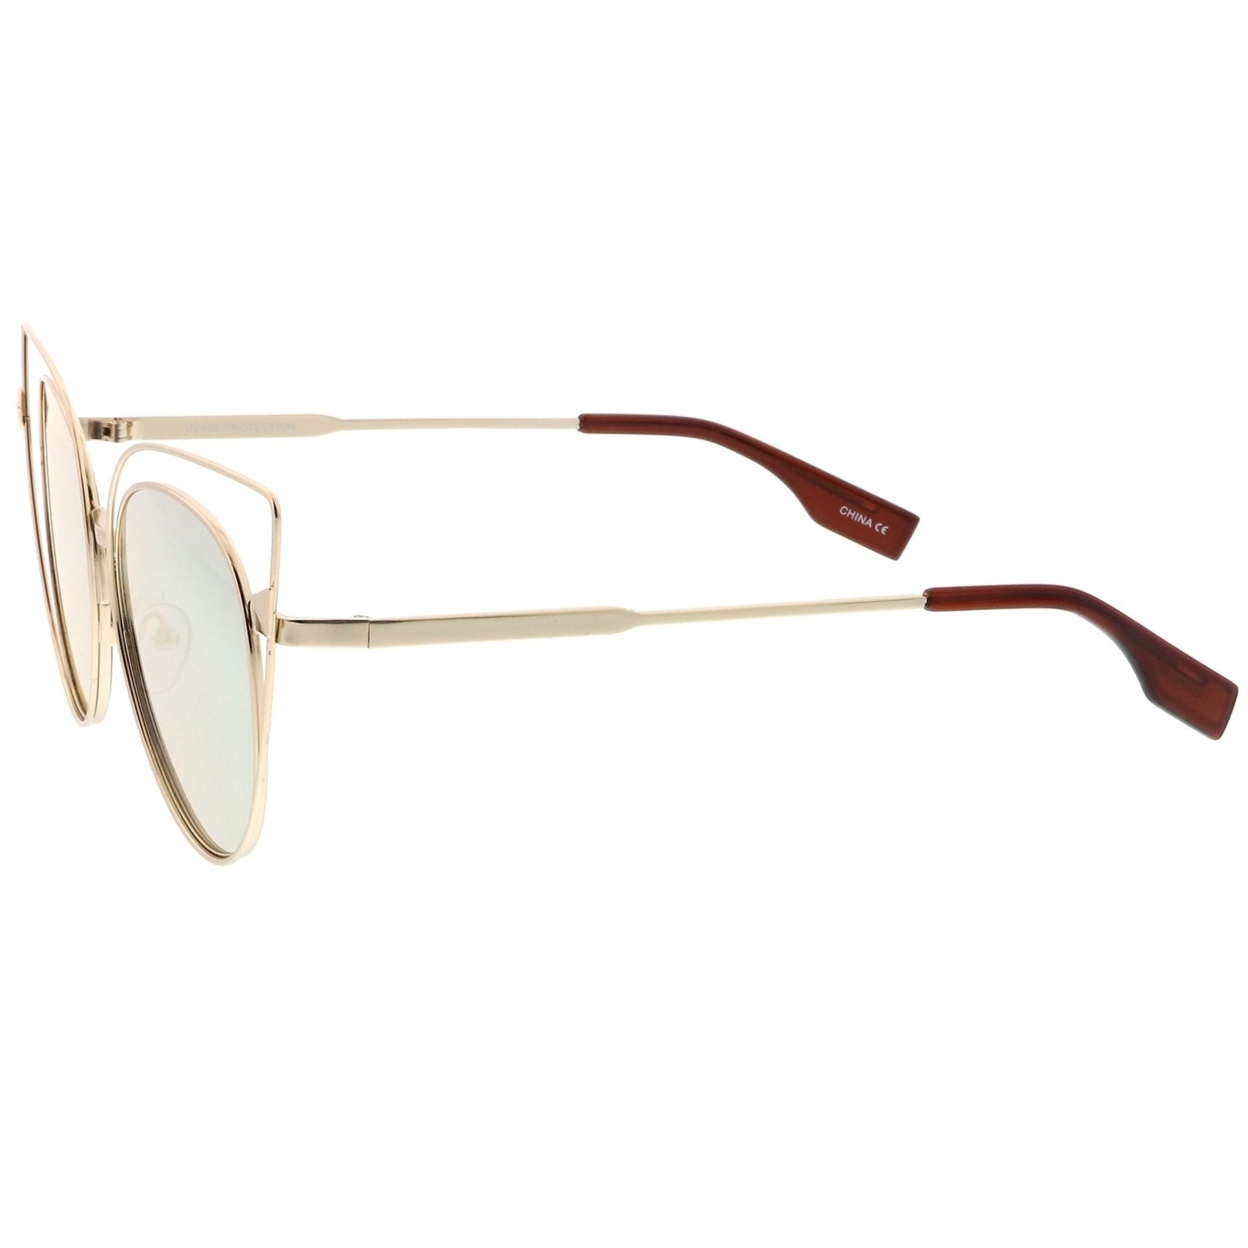 Oversize Metal Cutout Frame Arrow Accent Pink Mirror Flat Lens Cat Eye Sunglasses 57mm - Gold-Gold / Pink Mirror